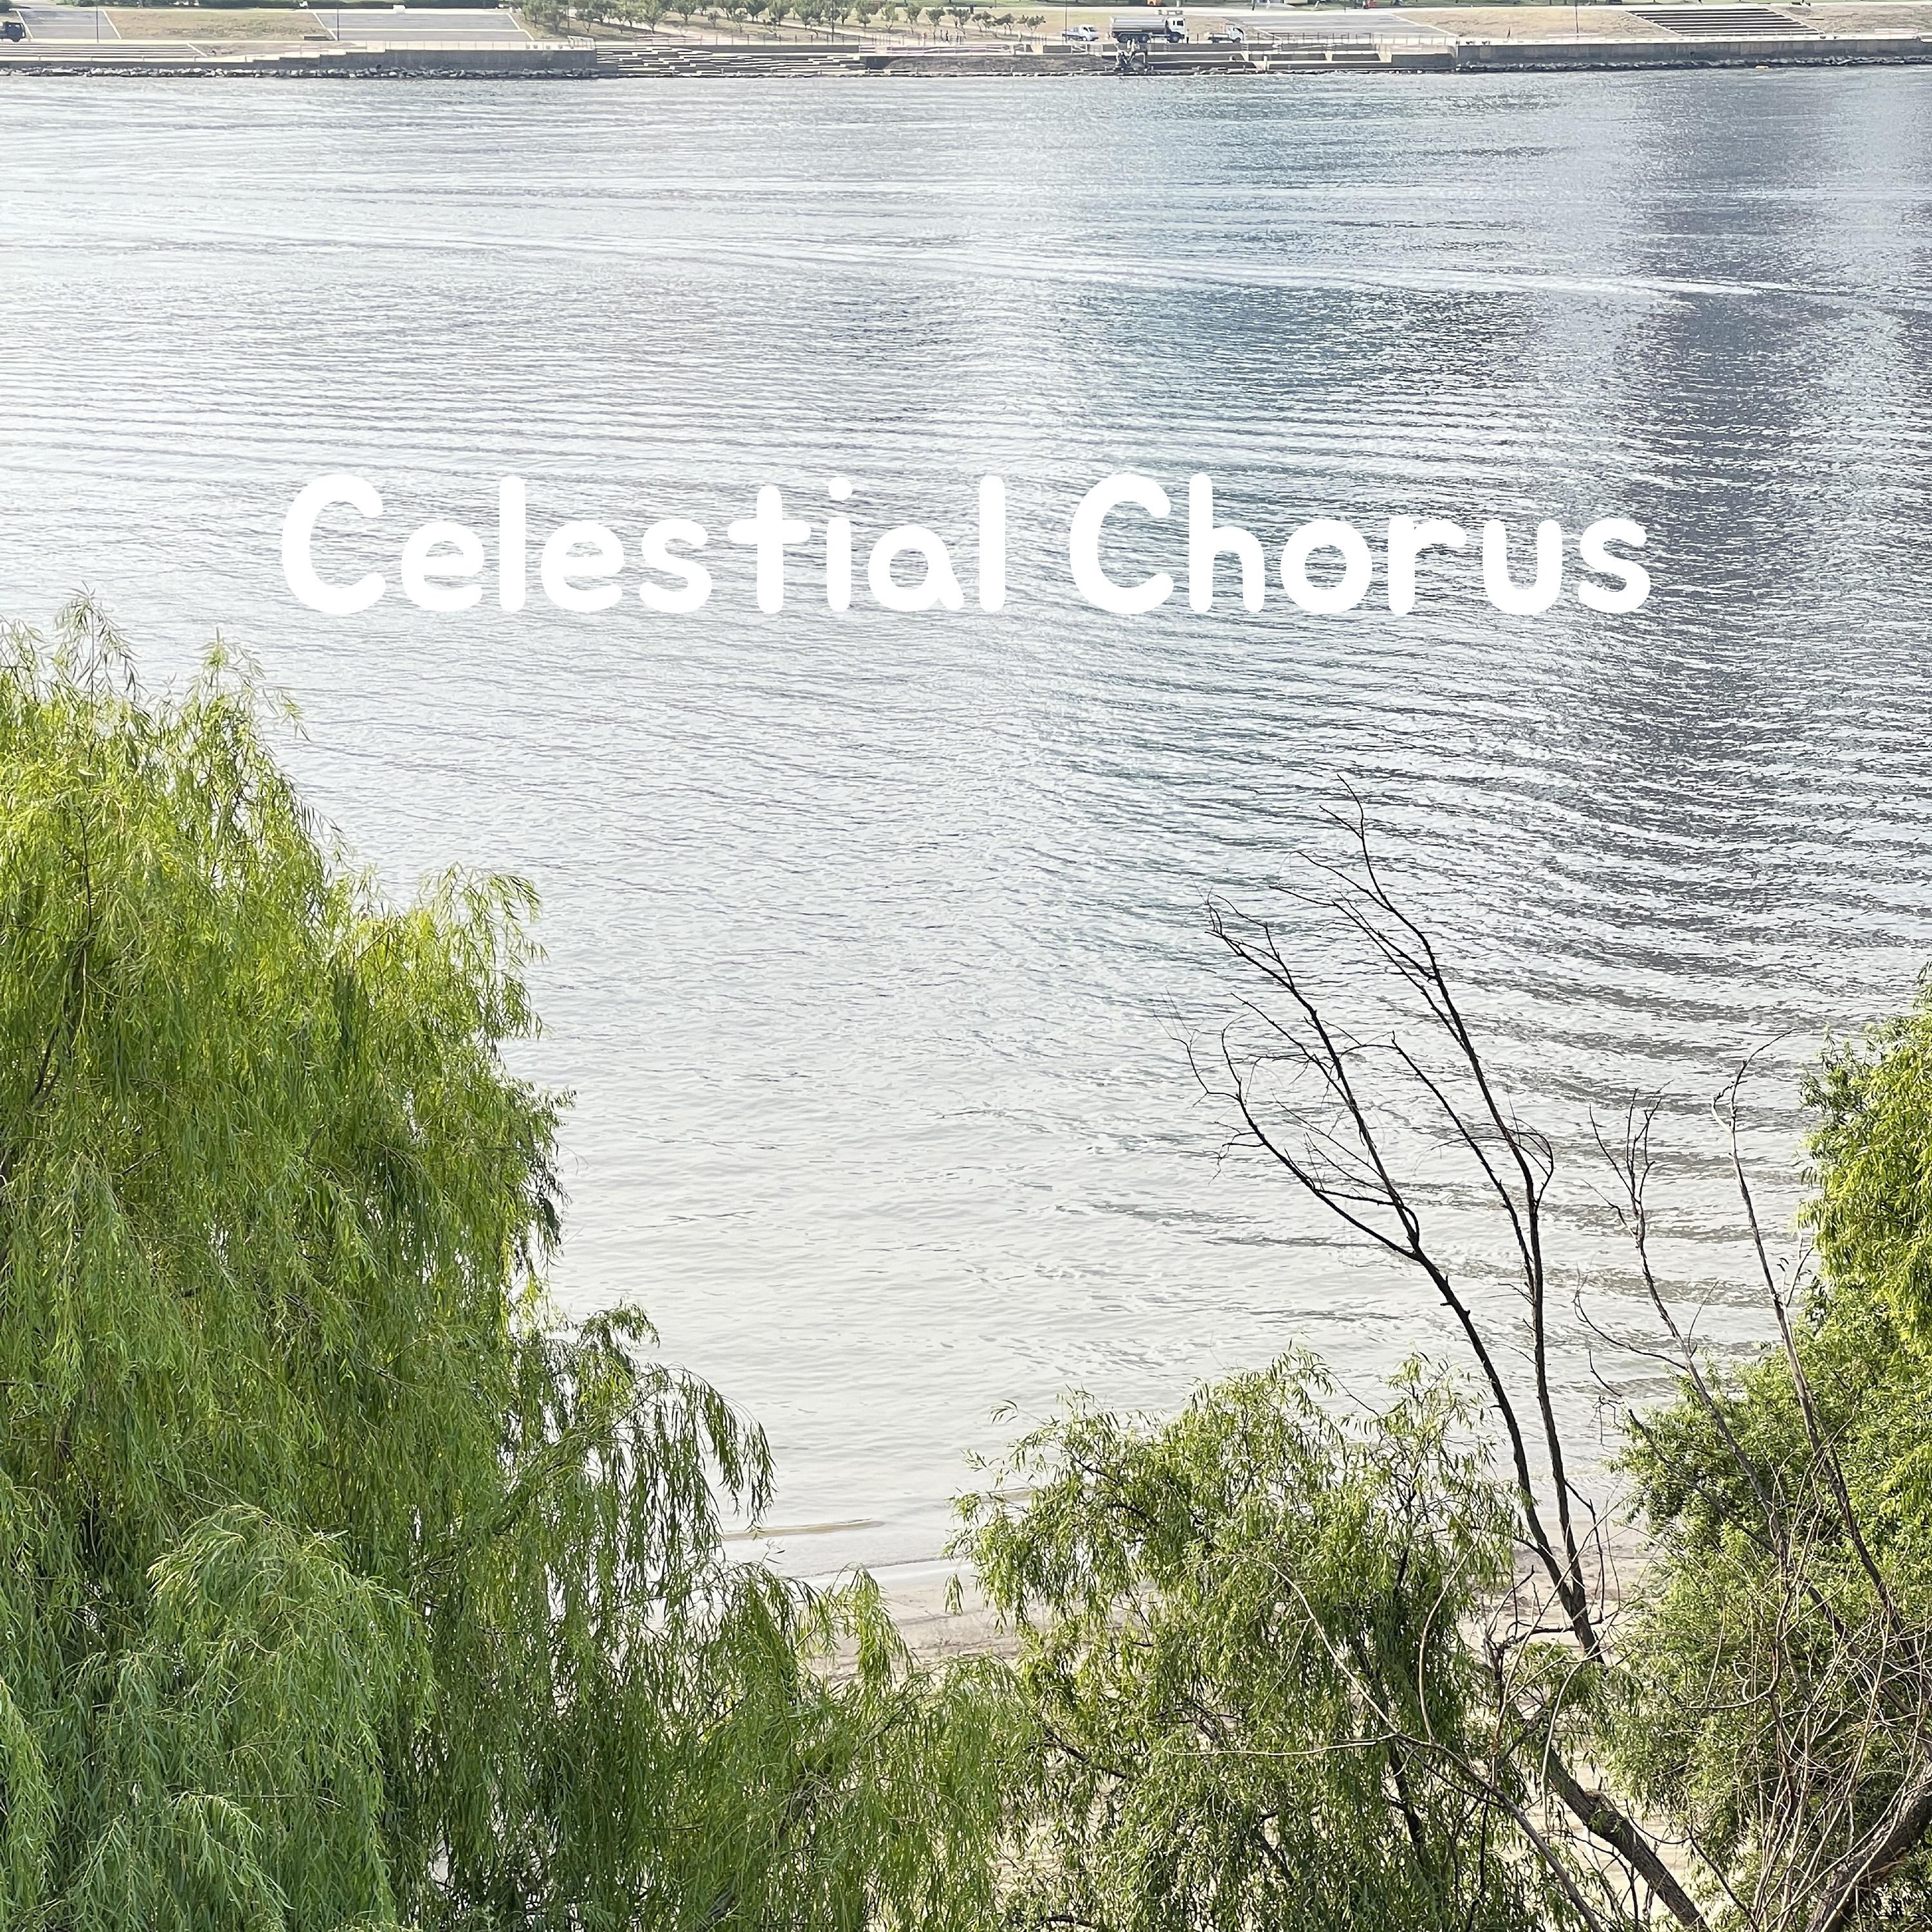 Постер альбома Celestial Chorus